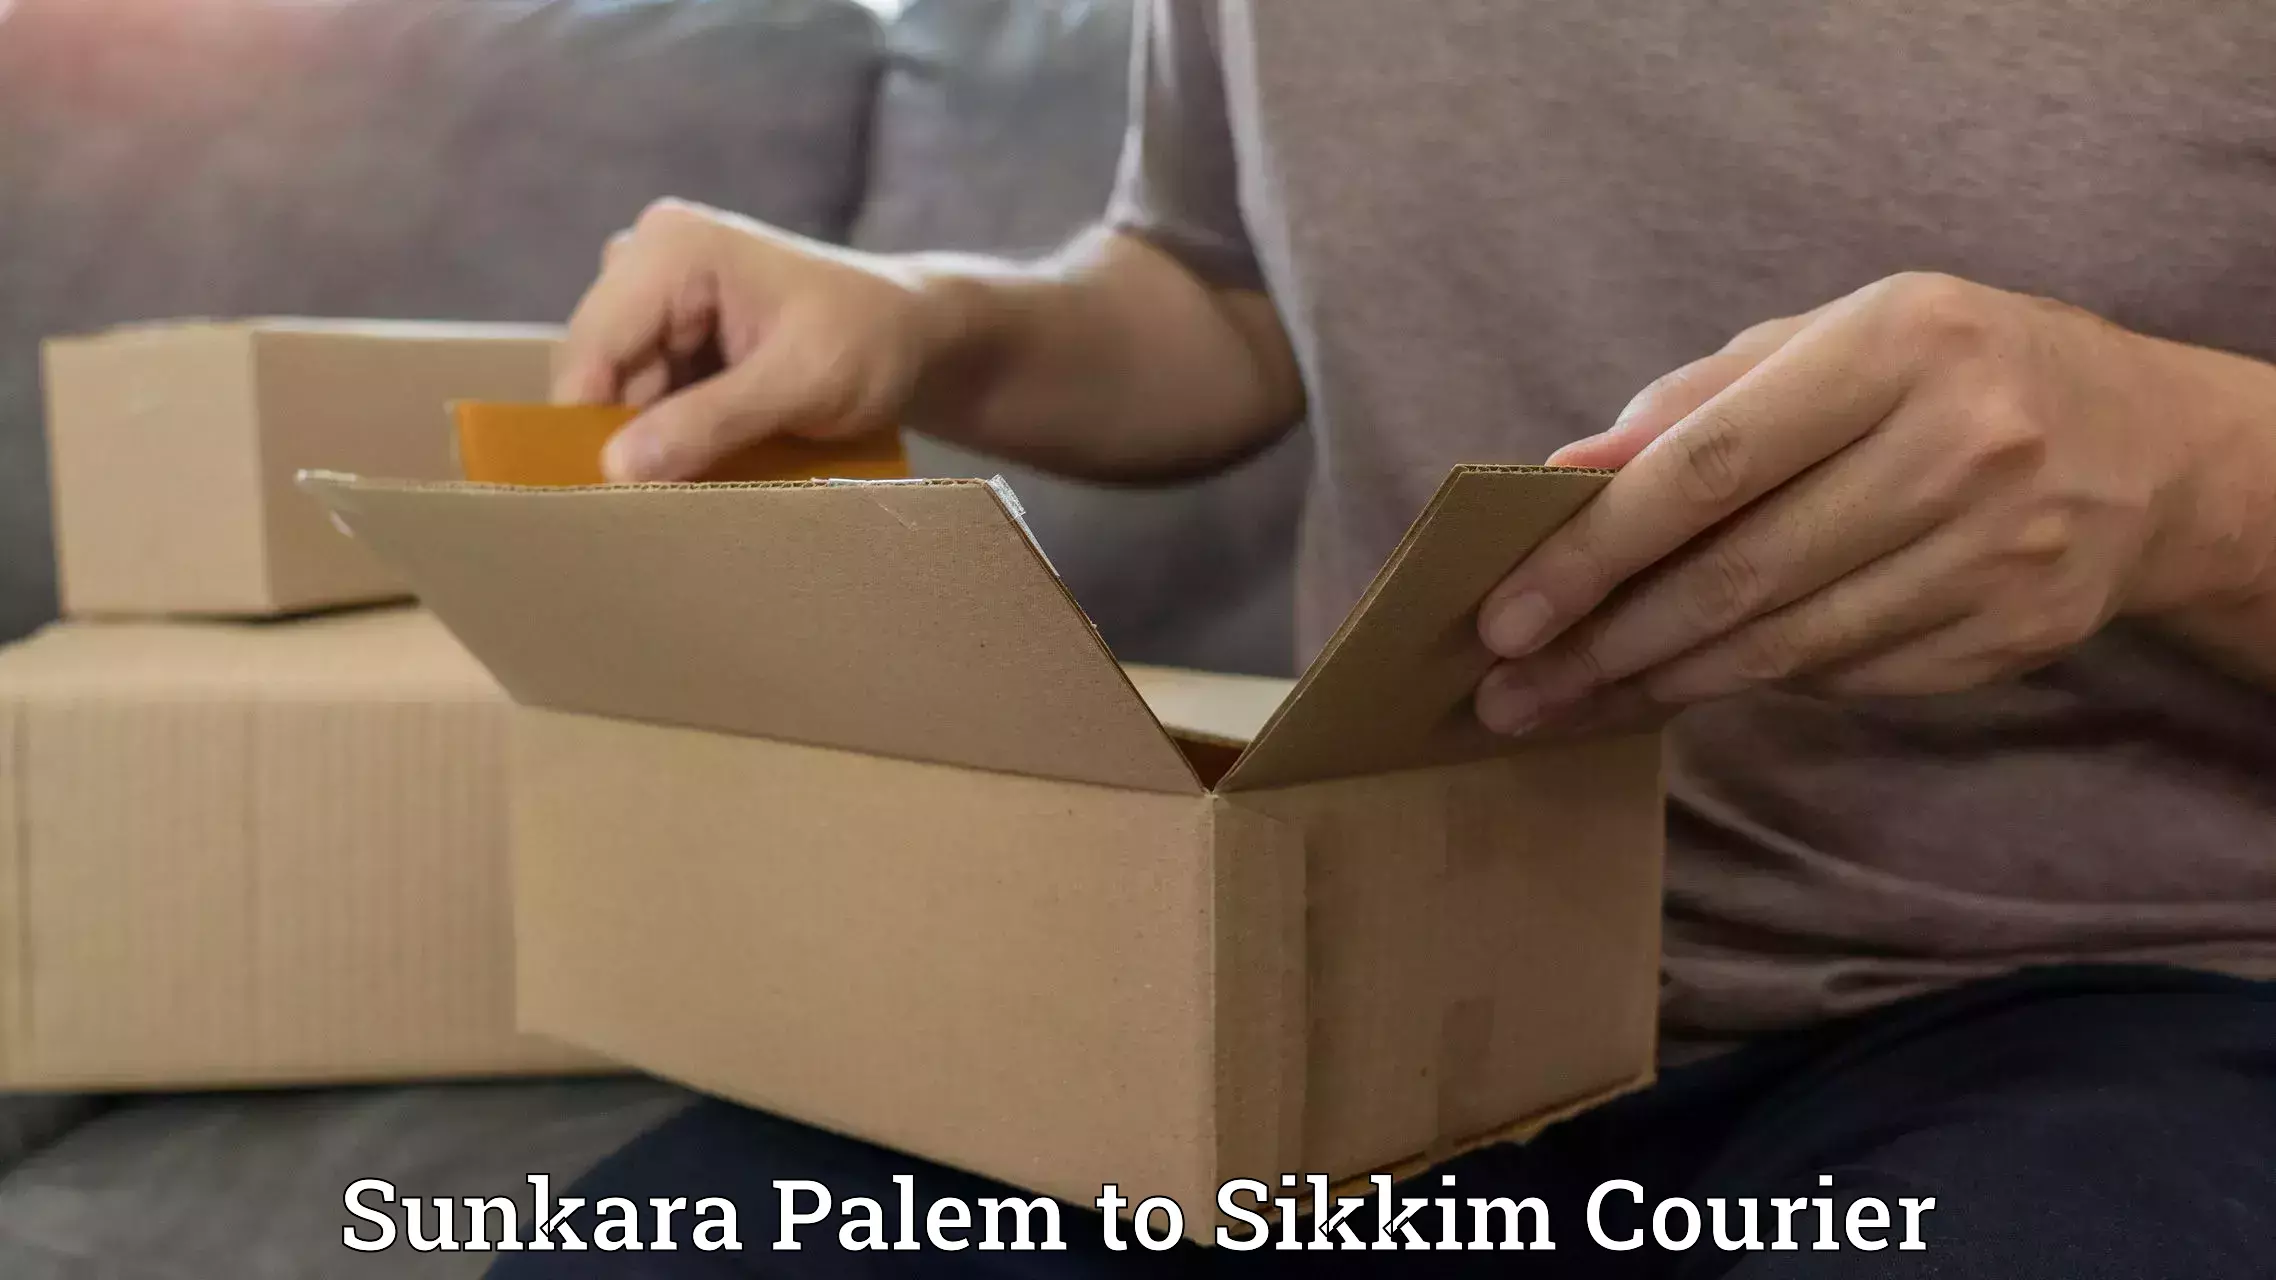 Efficient order fulfillment in Sunkara Palem to Sikkim